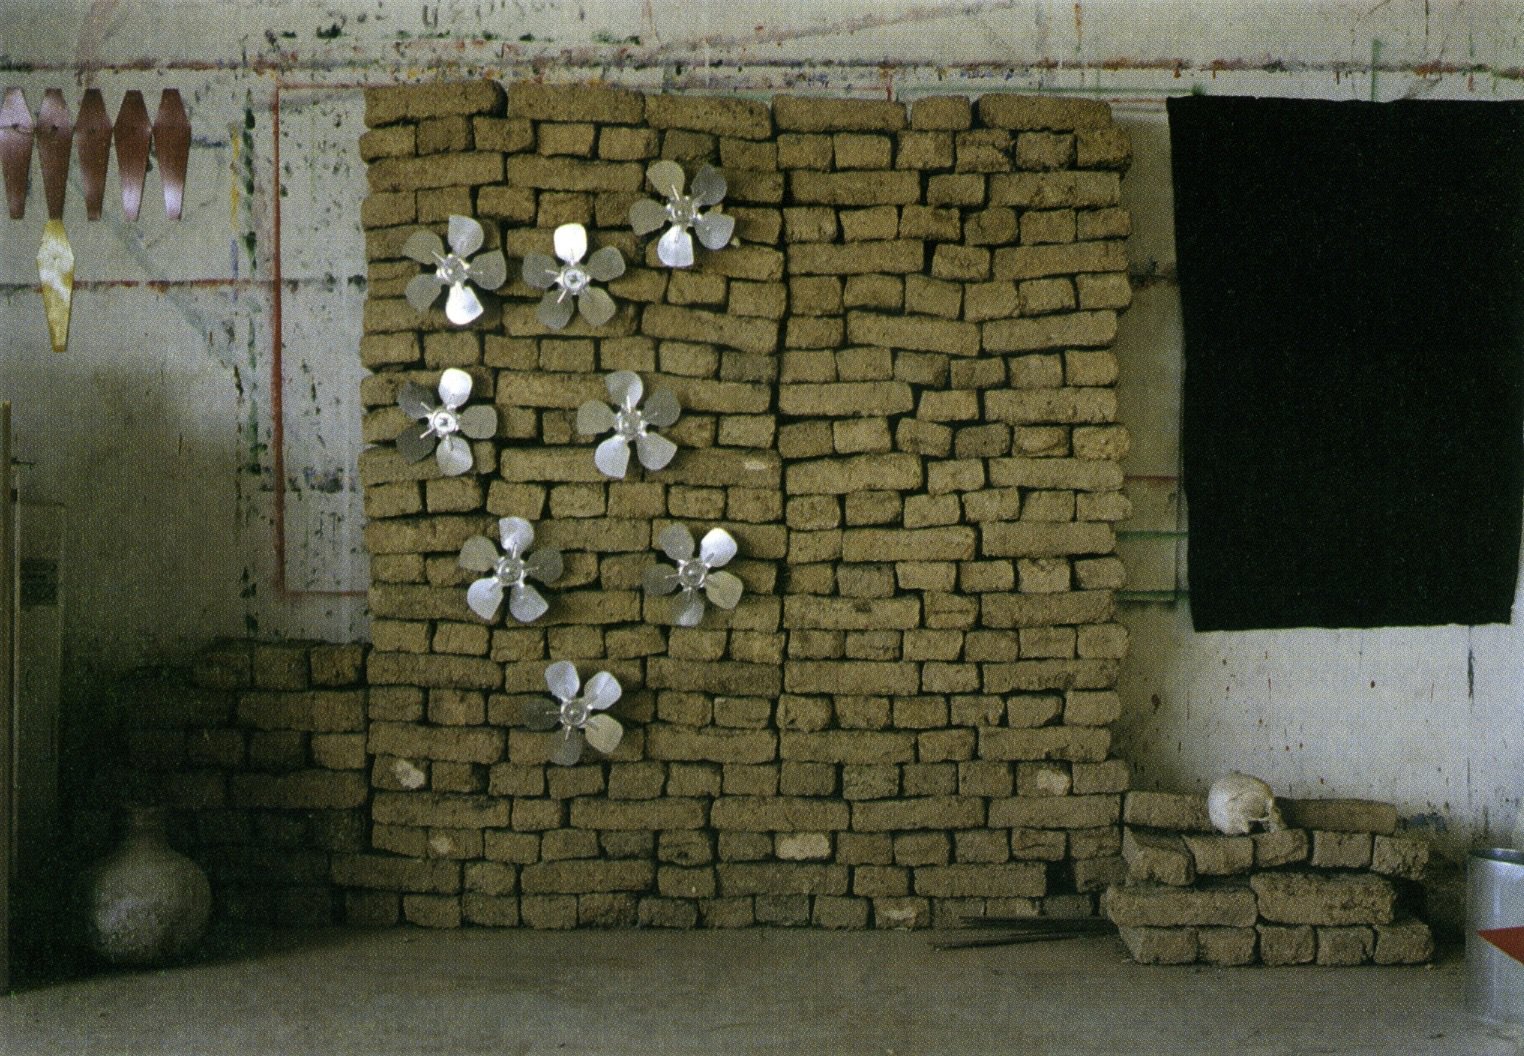 Thanasis Totsikas, Untitled, bricks, elecrtirc fans, 250 x 220 cm (98 3/8 x 86 5/8 in), 1986